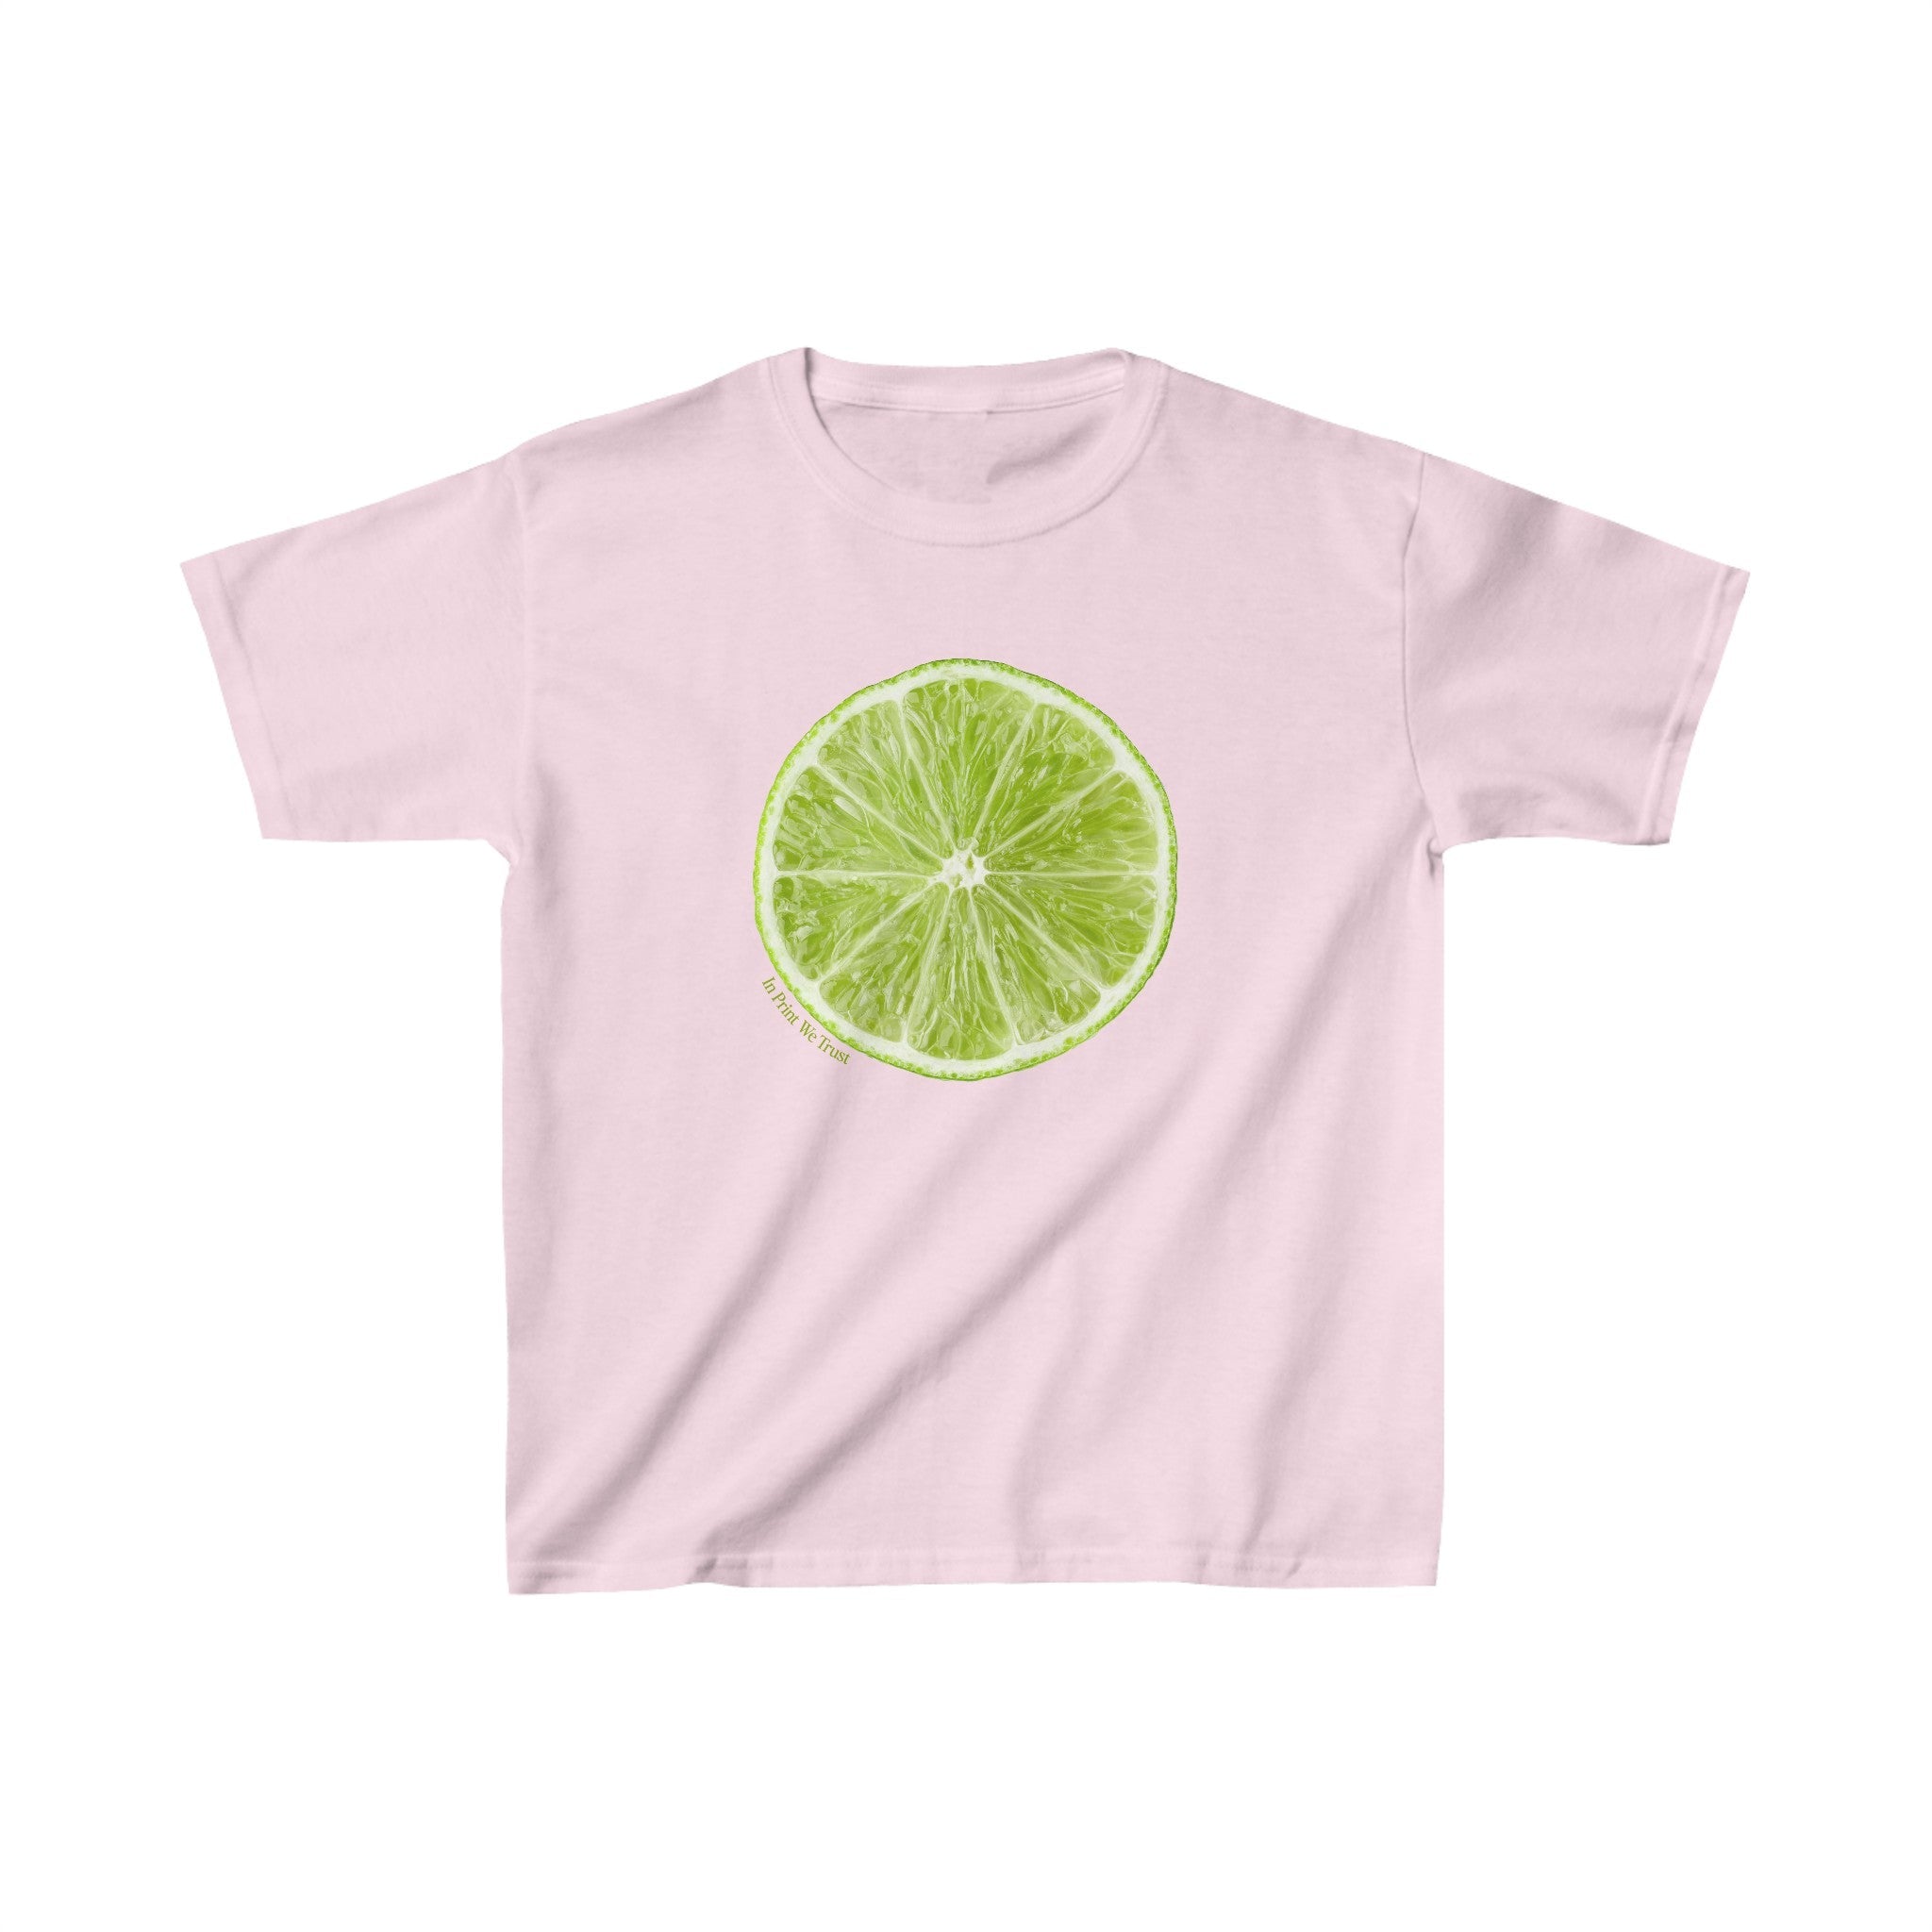 'Lime' baby tee - In Print We Trust